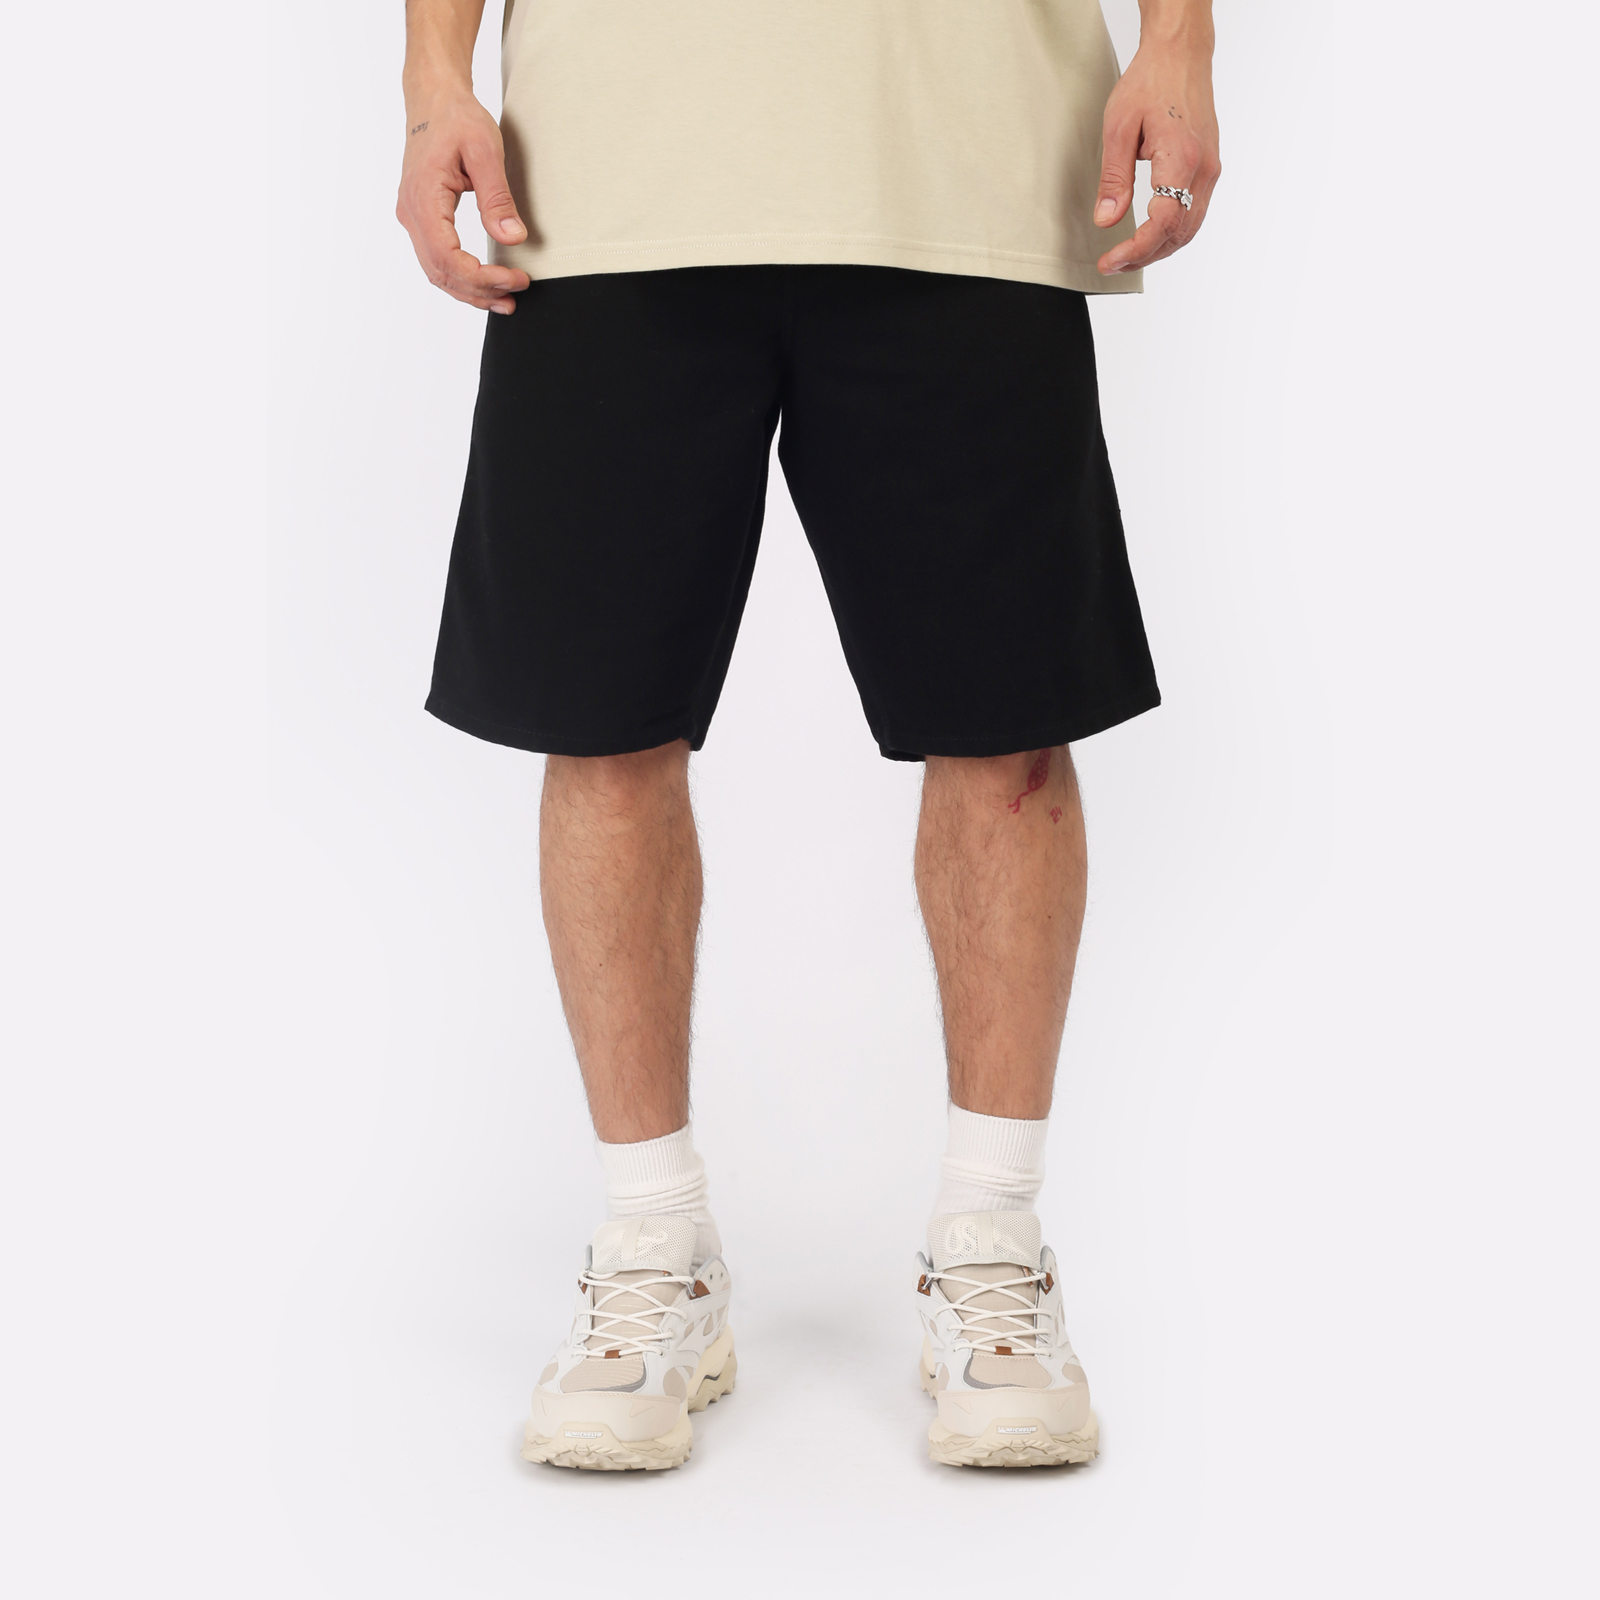 Мужские шорты Carhartt WIP Single Knee Short (I027942-black)  - цена, описание, фото 1